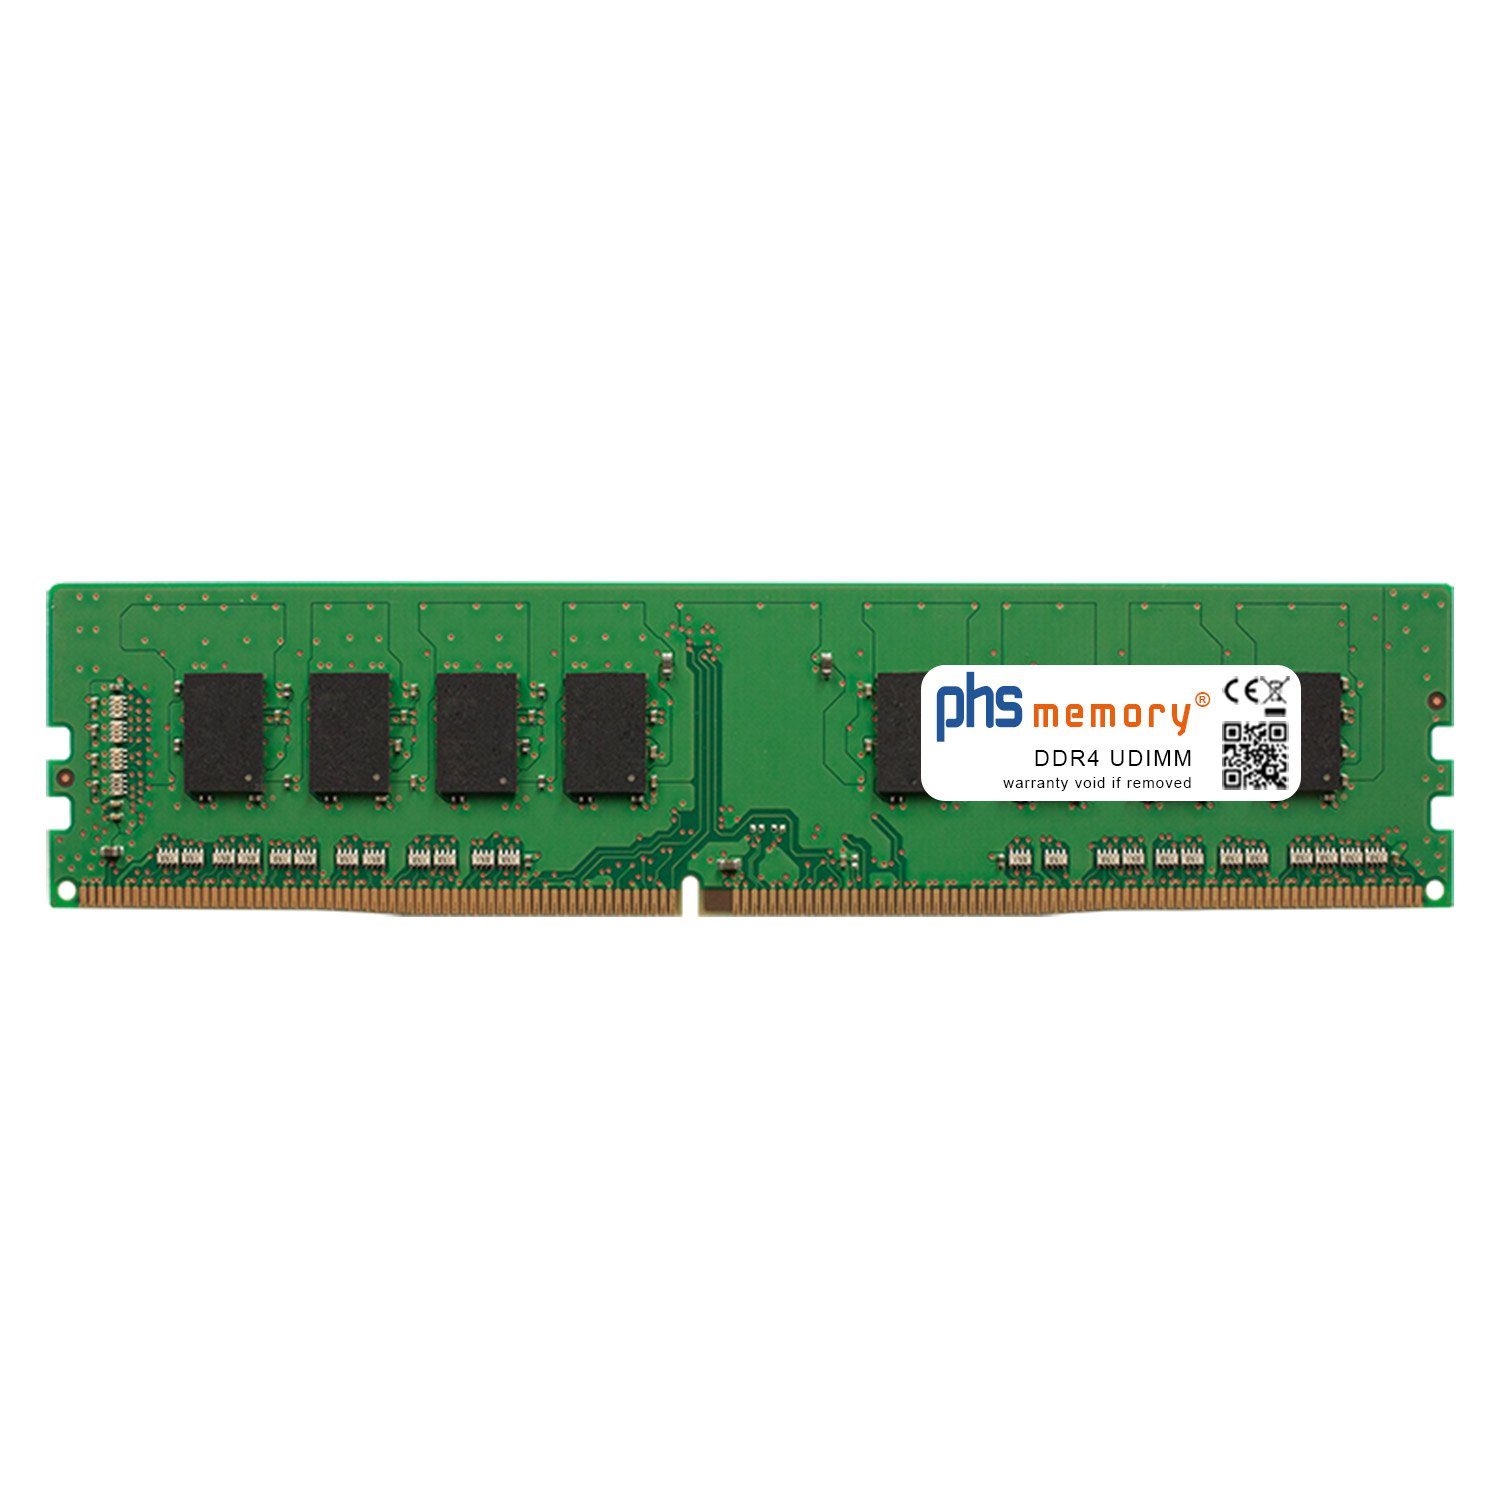 PHS-memory RAM für Captiva Power Starter I65-021 Arbeitsspeicher